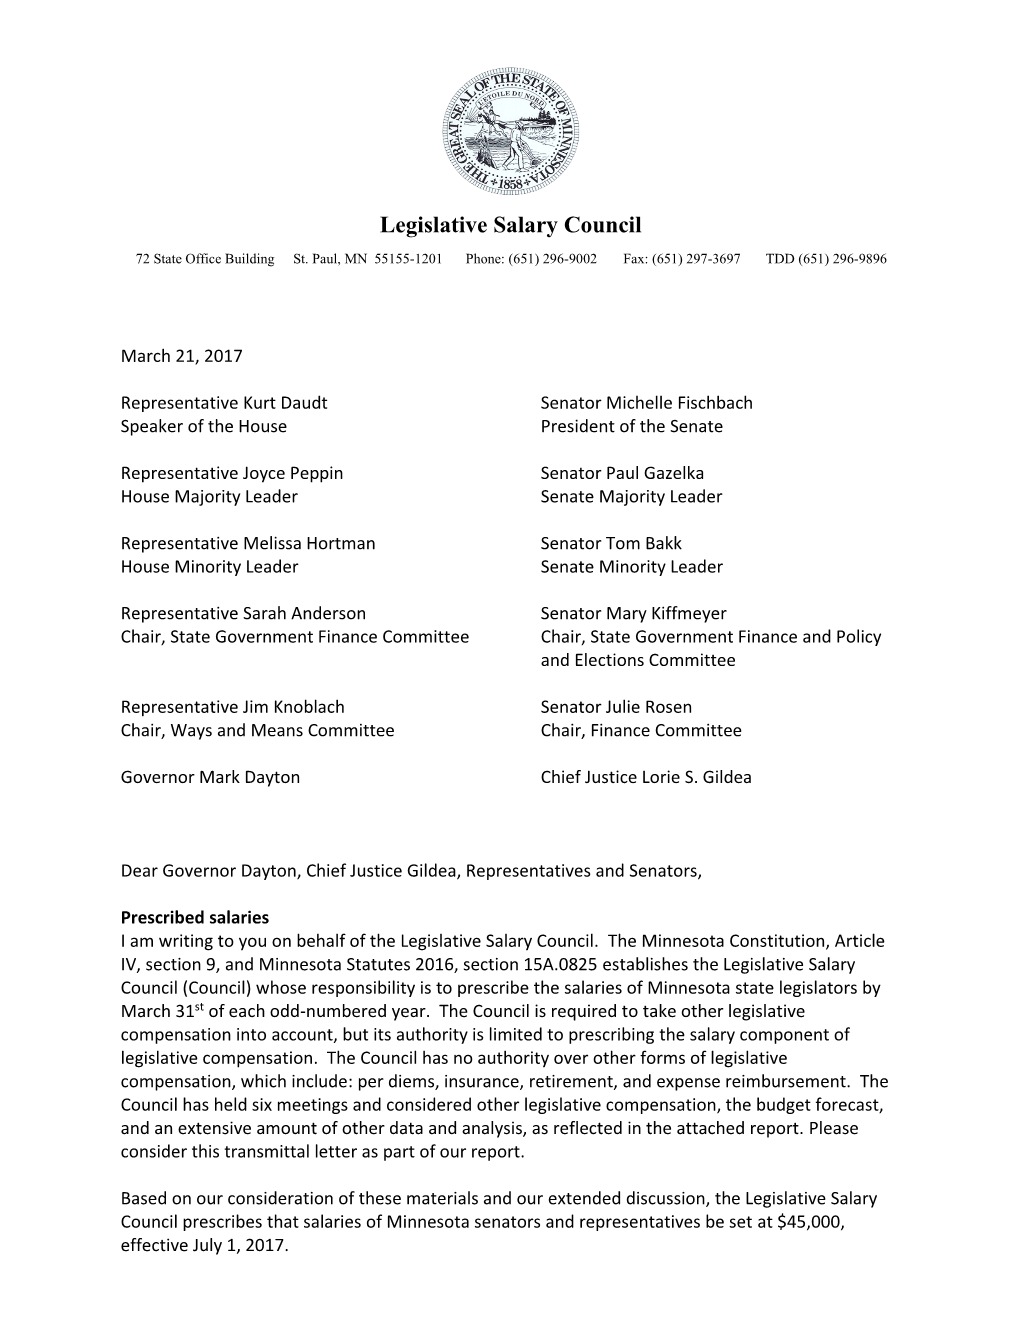 Report of the Legislative Salary Council 03-21-2017